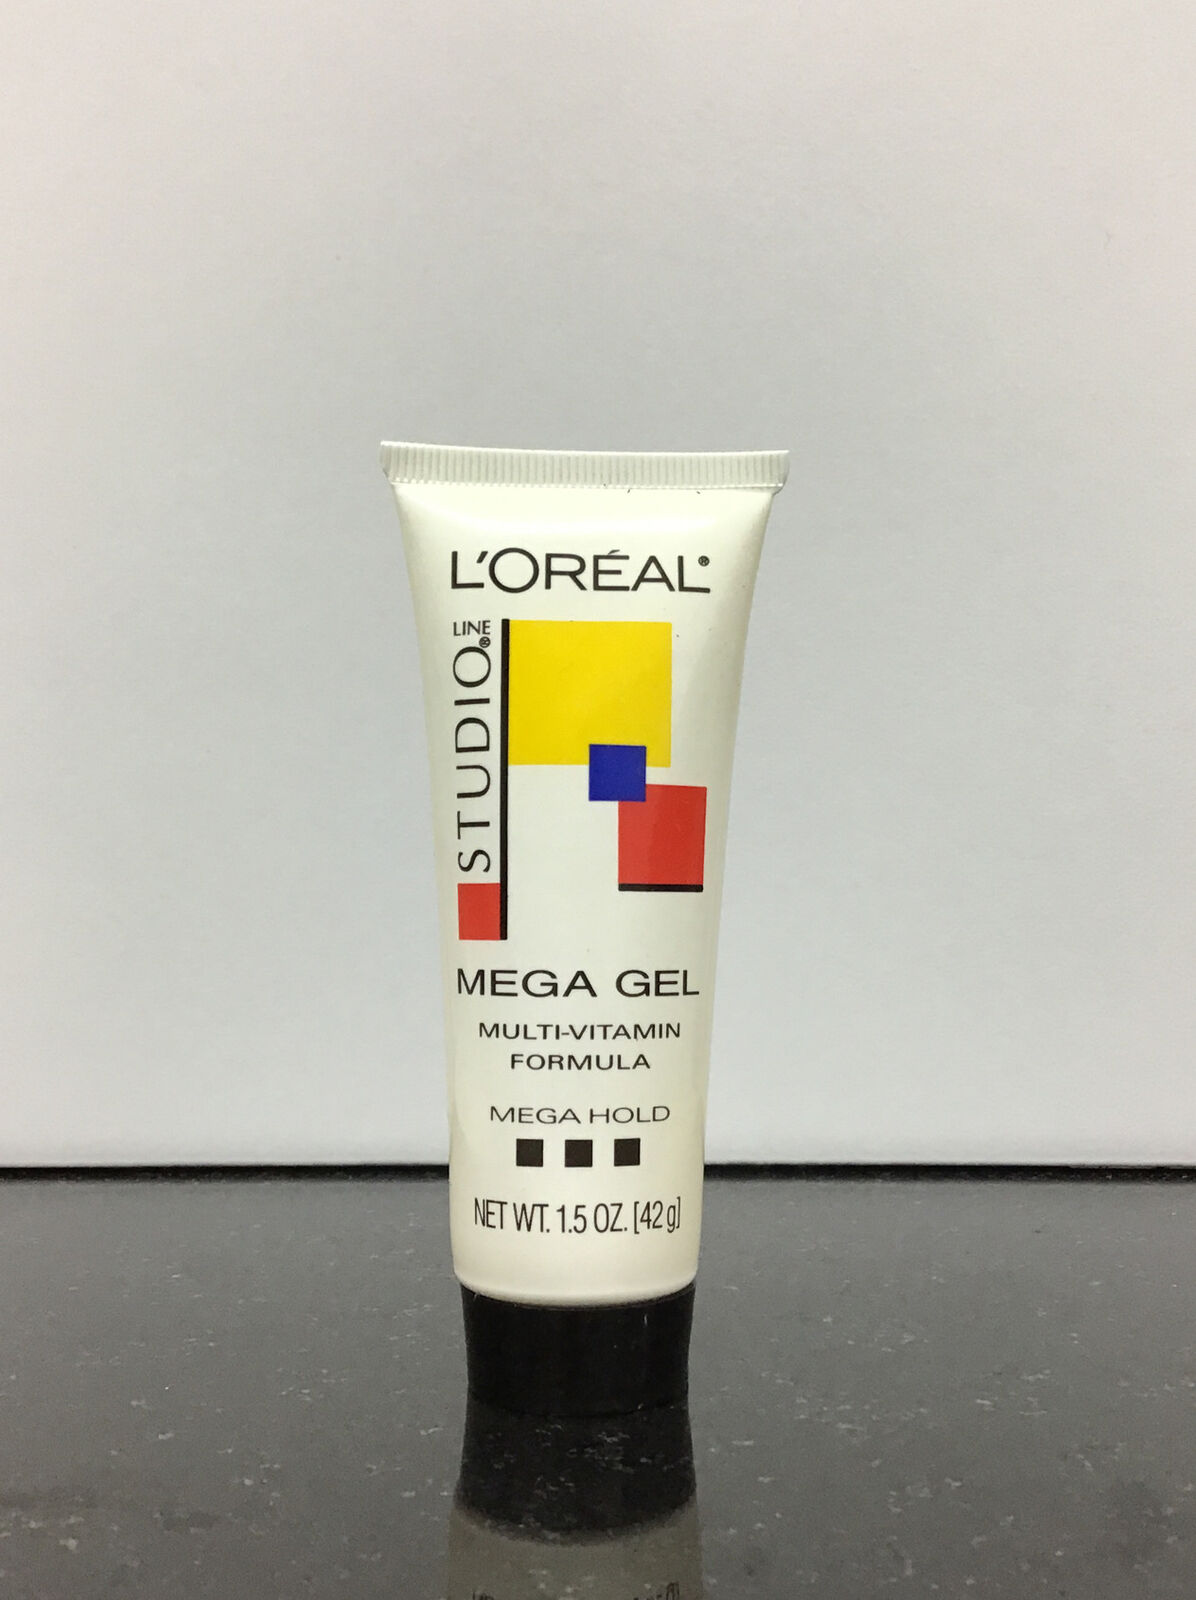 L’OREAL StudioLine - Mega gel - Multi-Vitamin formula Mega hold 1.5 oz